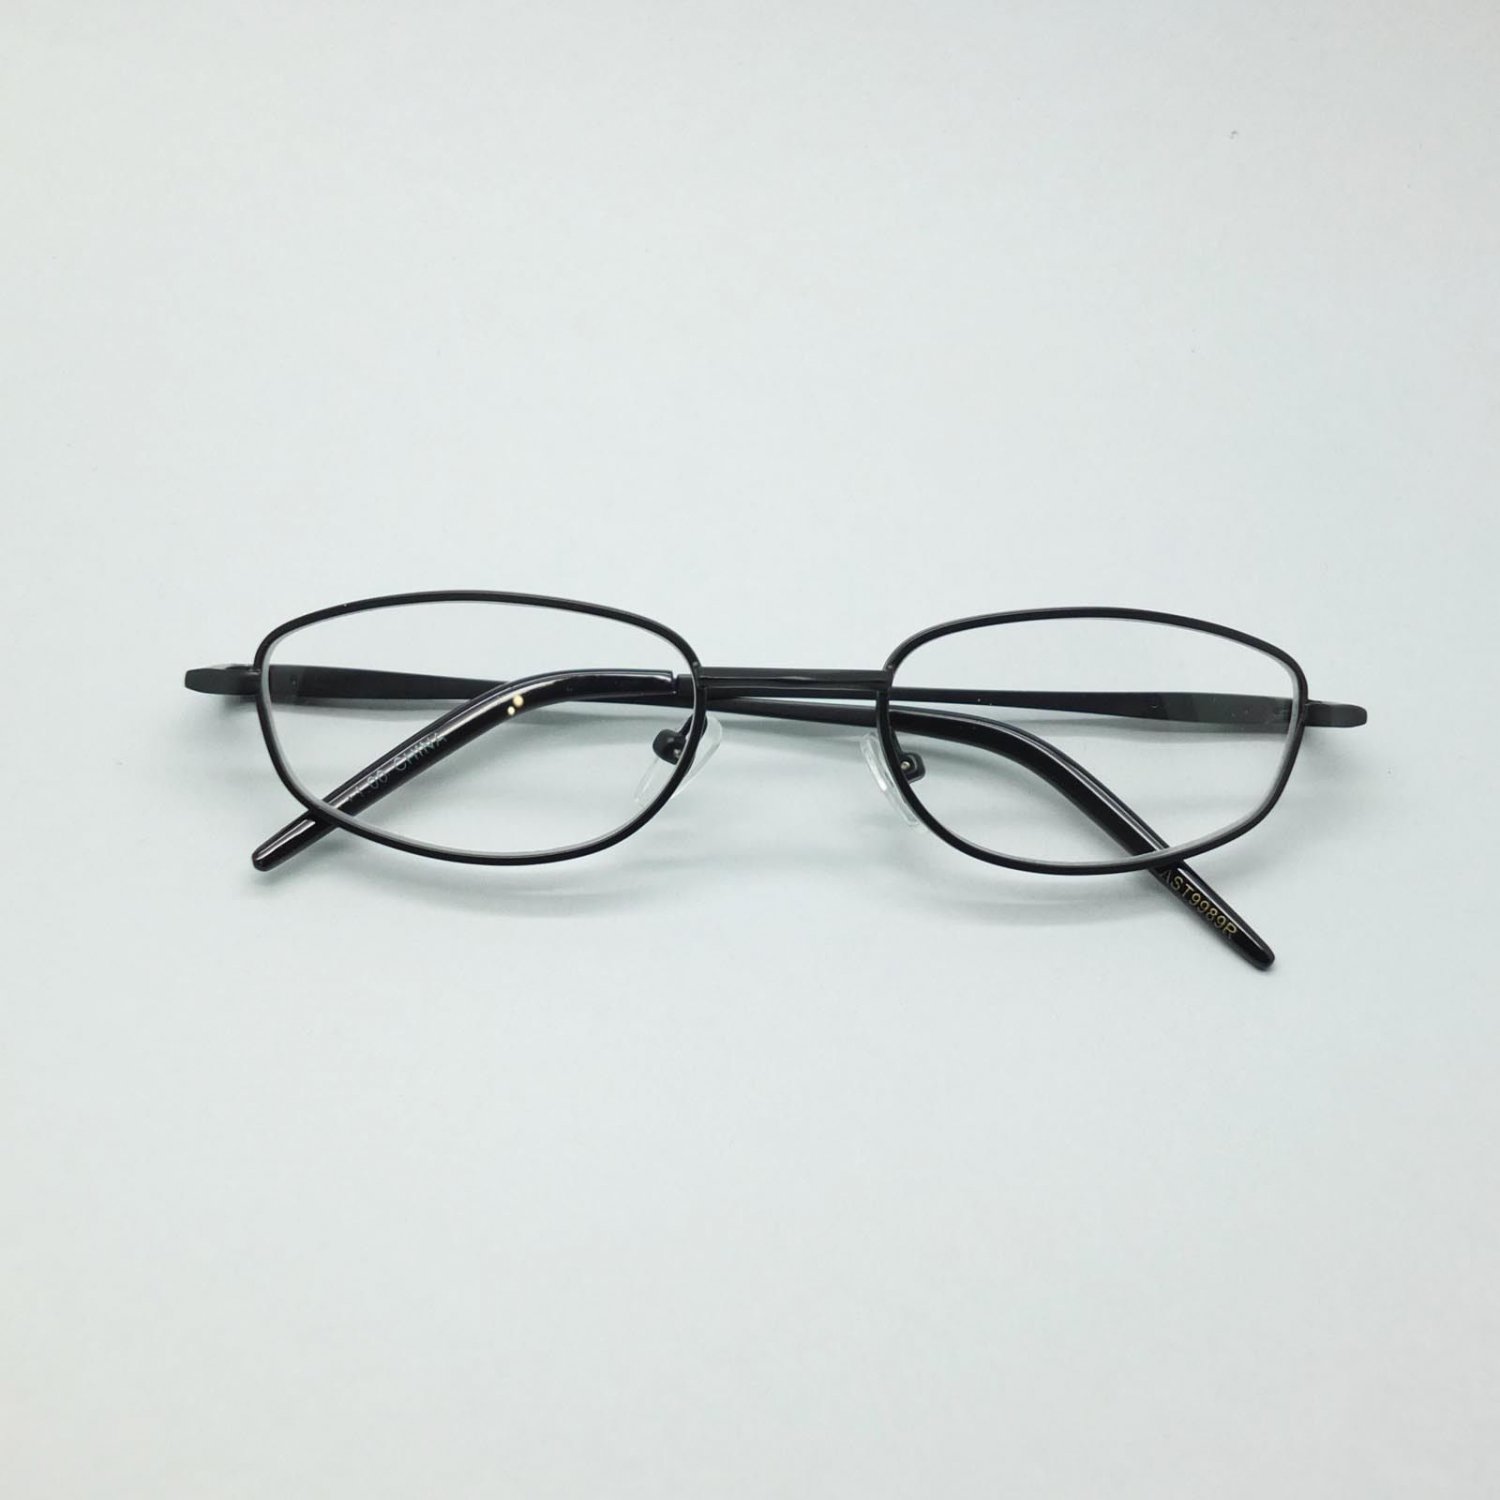 Wire Rim Matte Black Frame Reading Glasses Lightweight Small Lens +2.00